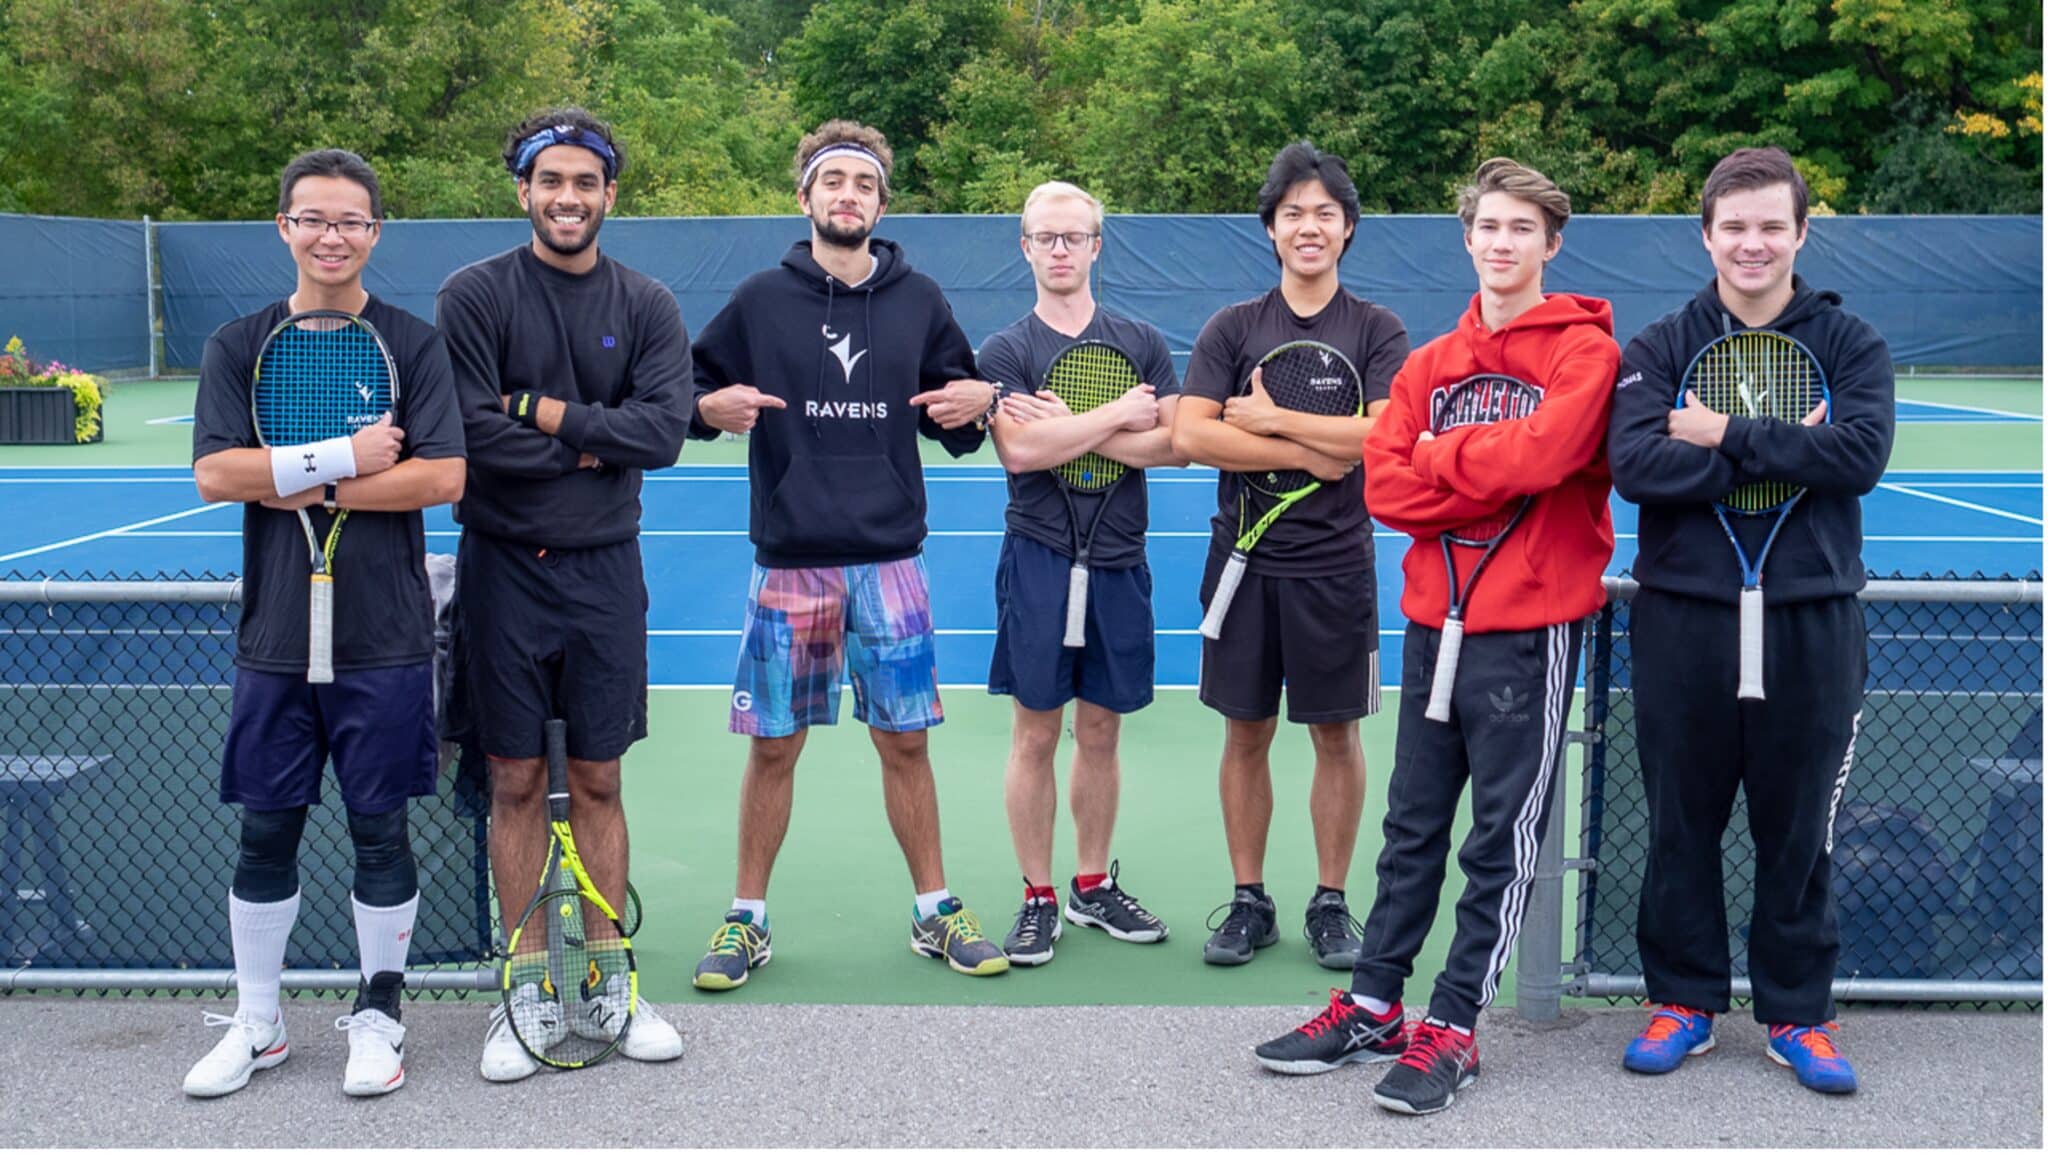 Shintaro (far left) with the Carleton University Competitive Tennis Team (2018).